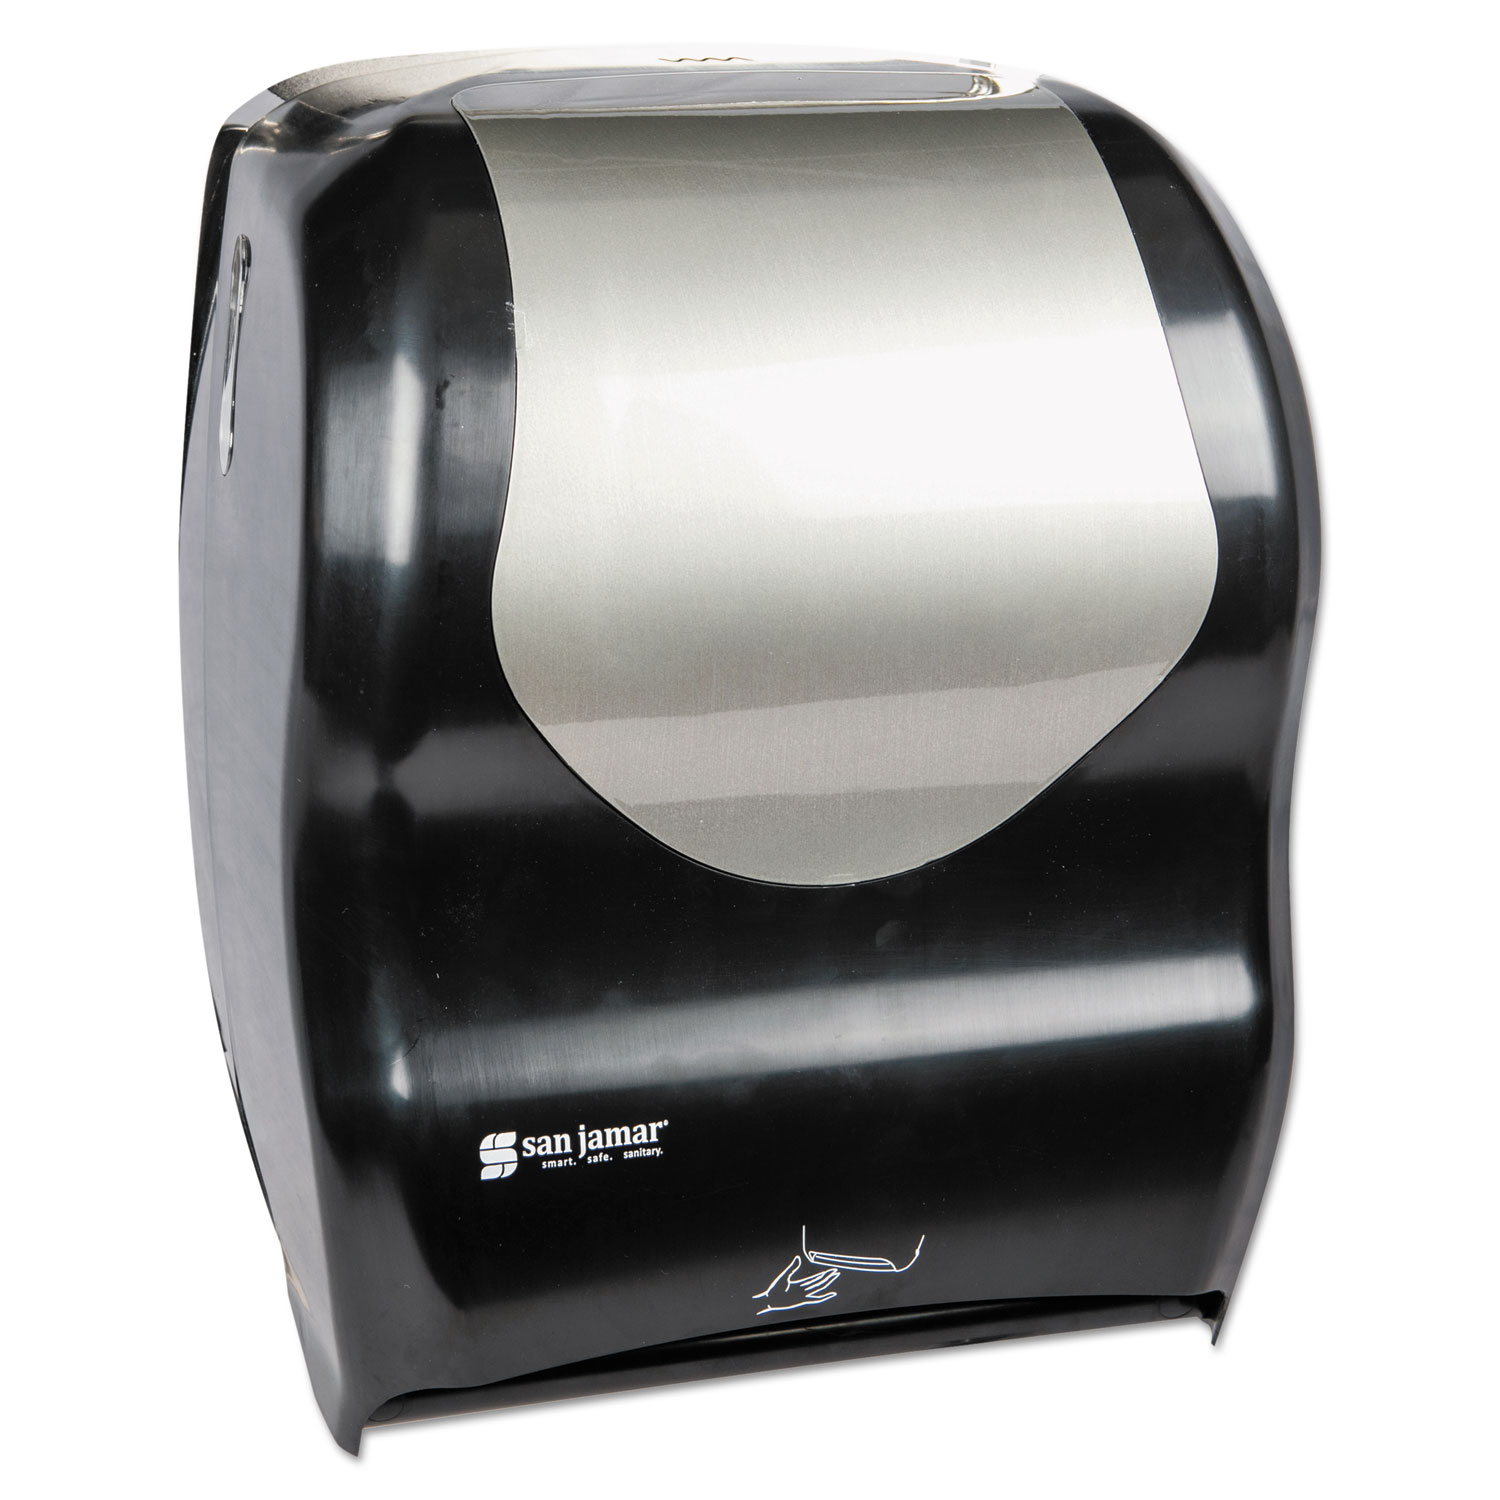 Smart System with iQ Sensor Towel Dispenser, 16 1/2 x 9 3/4 x 12, Black/Silver